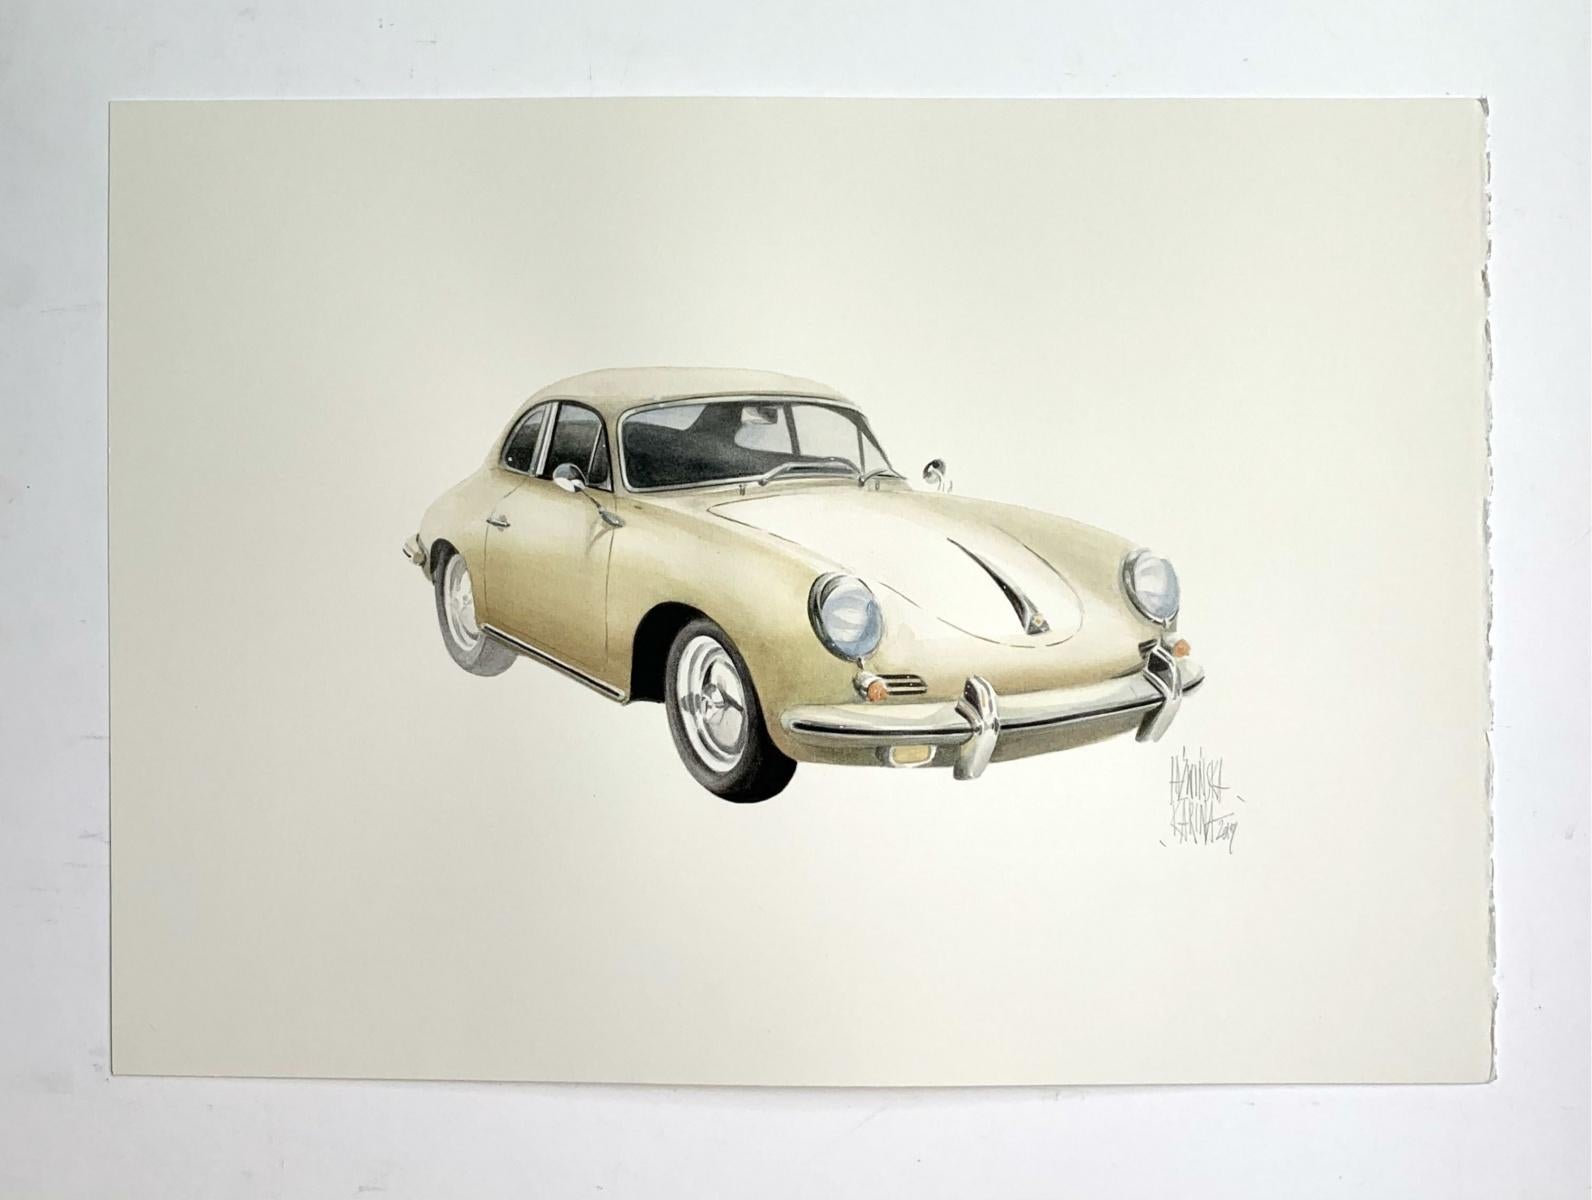   Porsche 356 bT - XXI century, Watercolour figurative, Cars, Vintage - Art by Karina Jaźwińska